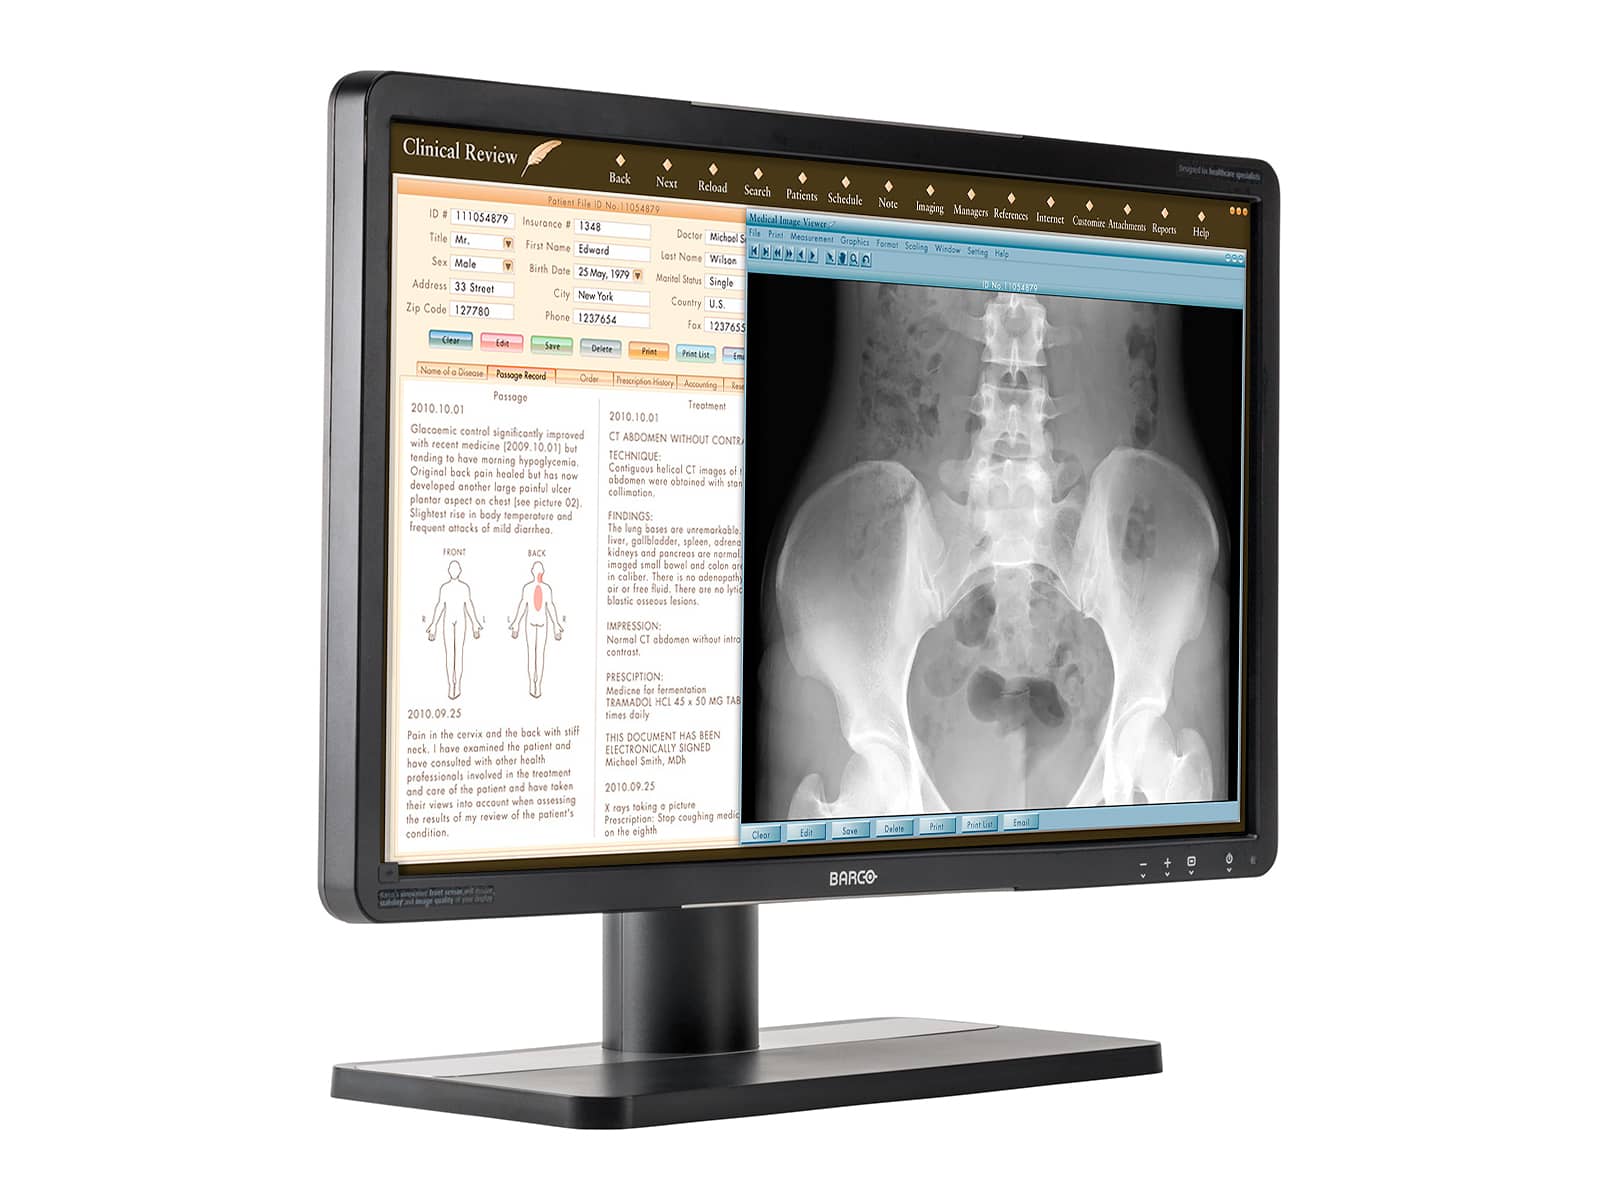 Barco Eonis MDRC-2224 WUXGA 24" 2MP Color LED Clinical Review Display Monitor Monitors.com 